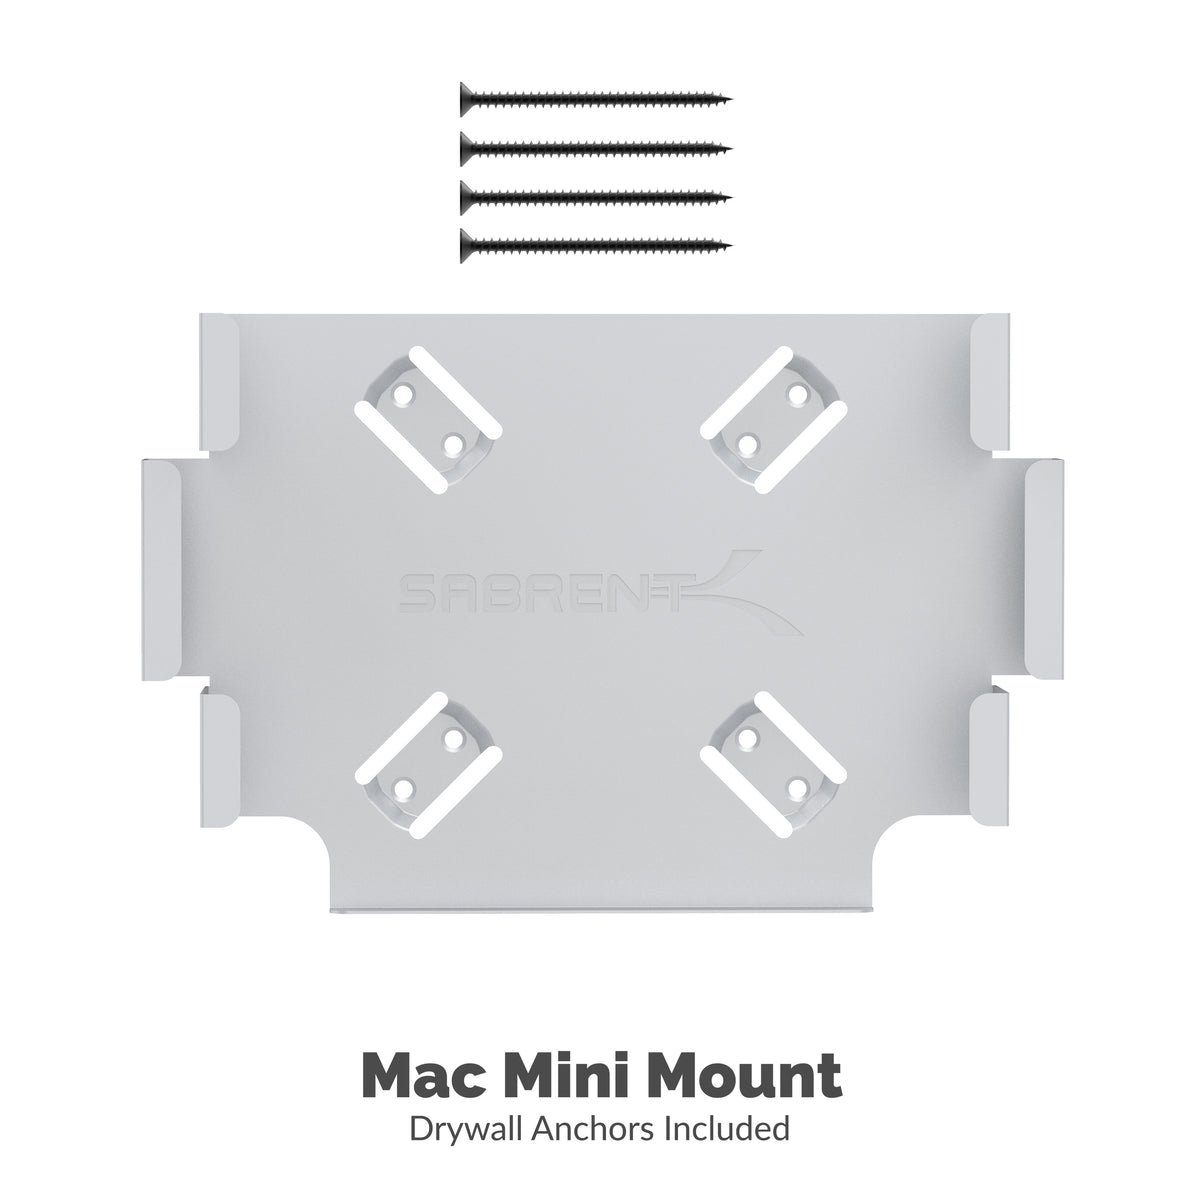 Mac mini VESA Mount